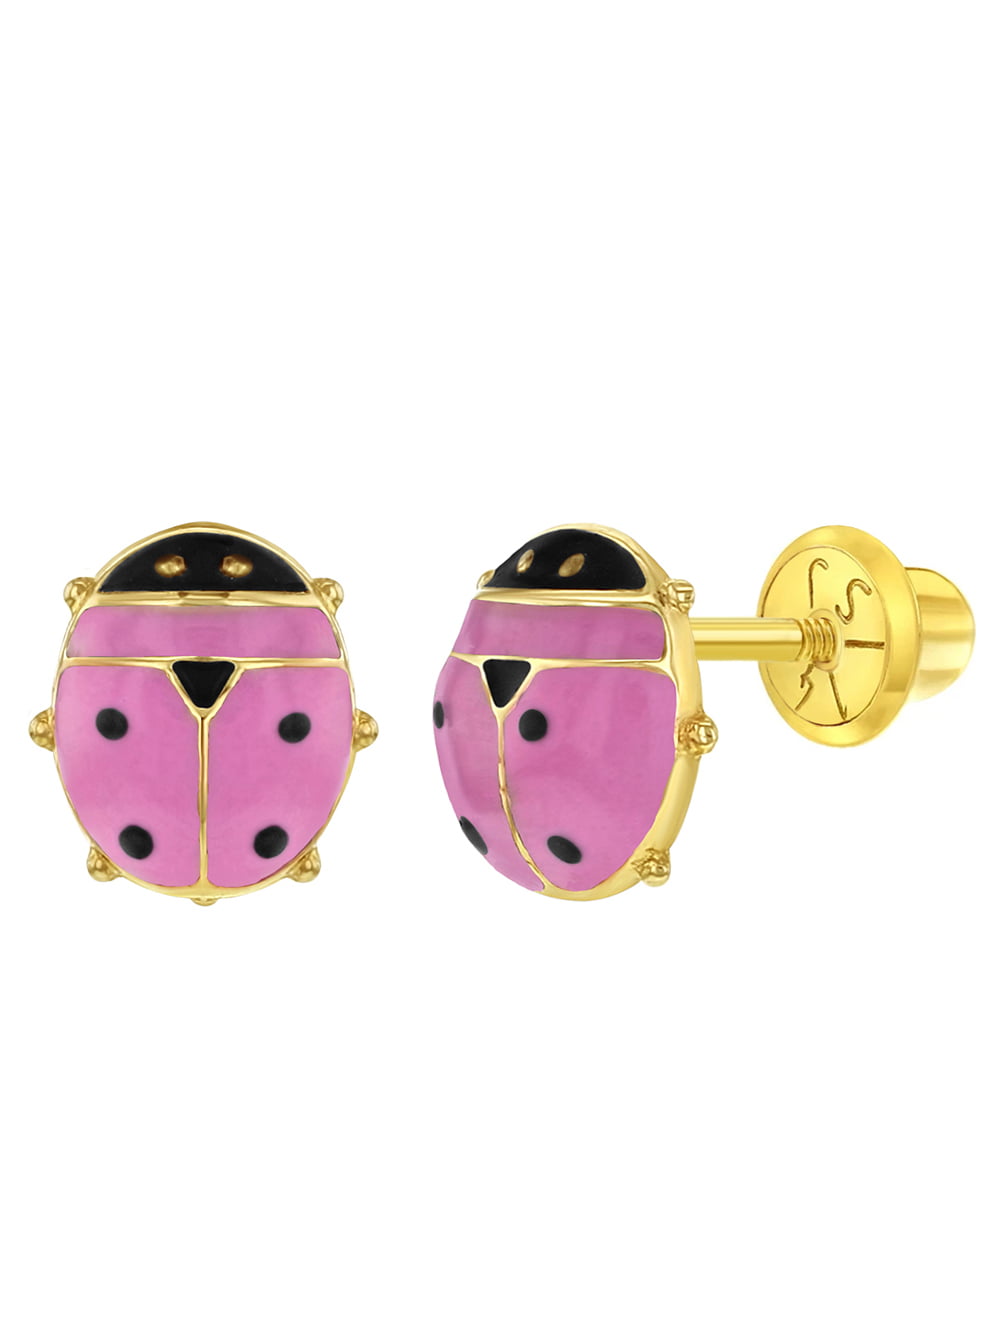 Children's Labybug Earrings 14k Solid Yellow Gold Pink Enamel Studs Screwback 